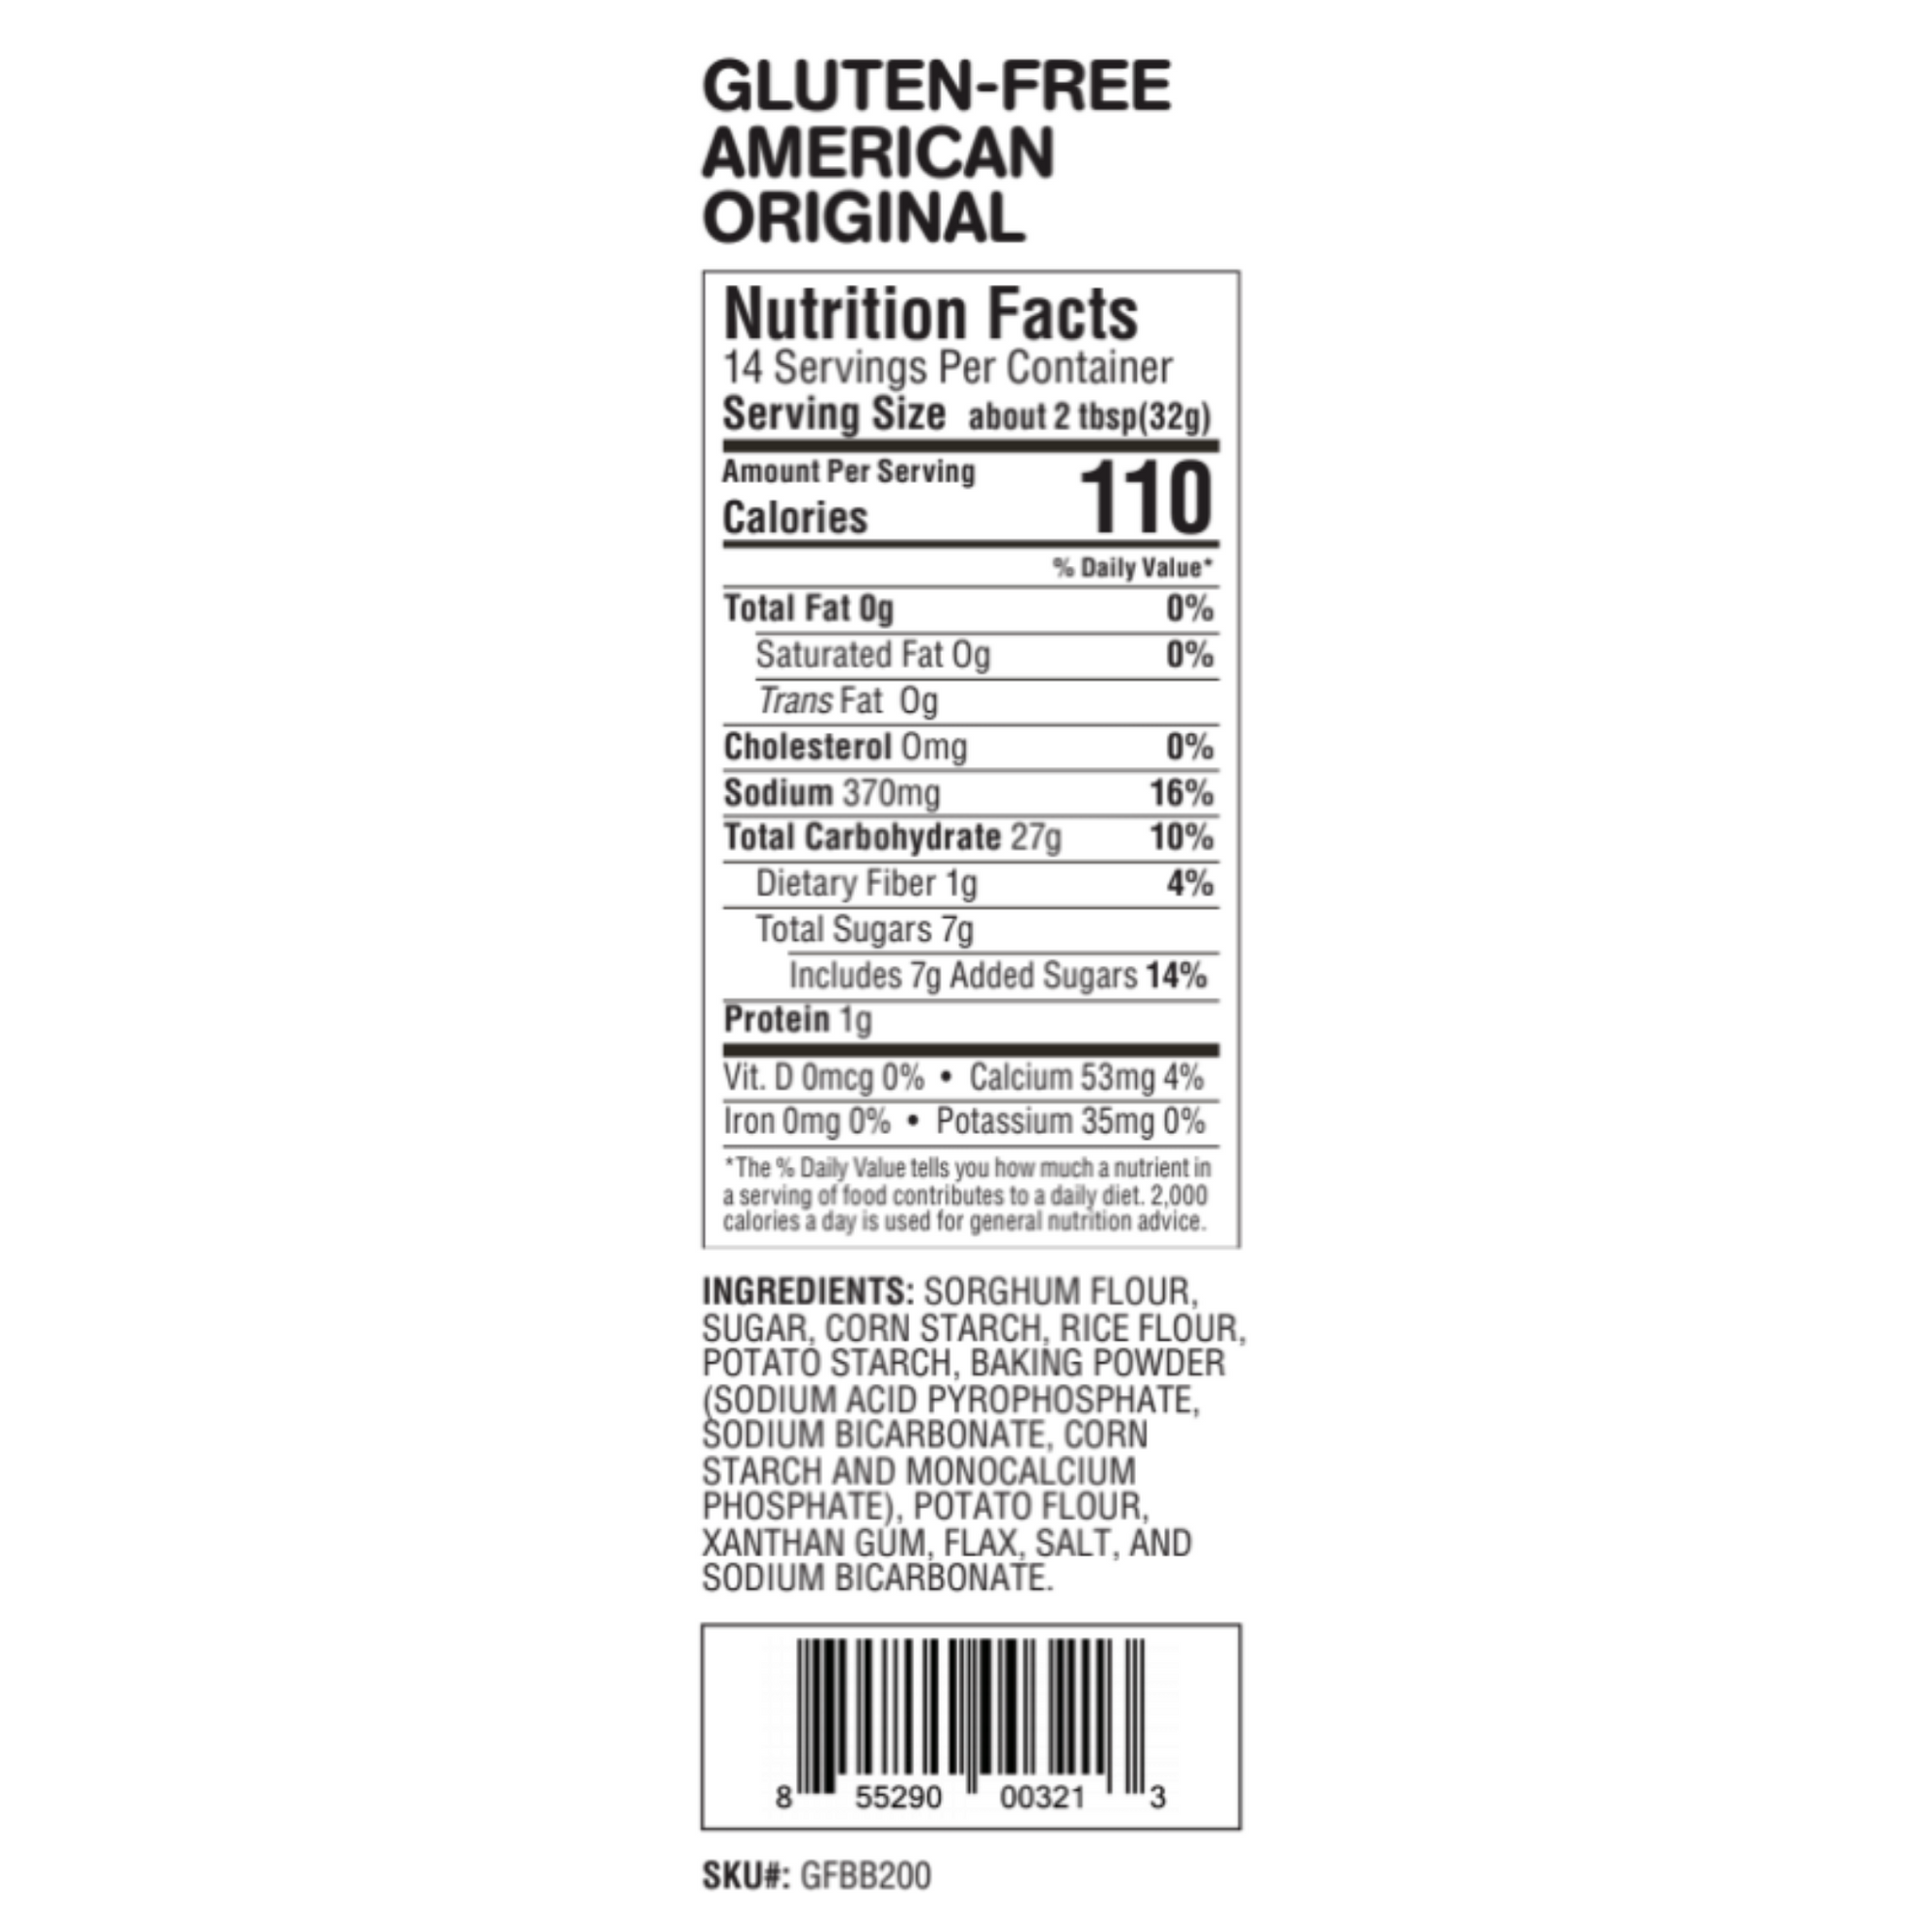 Gluten-Free American Original Nutrition Facts